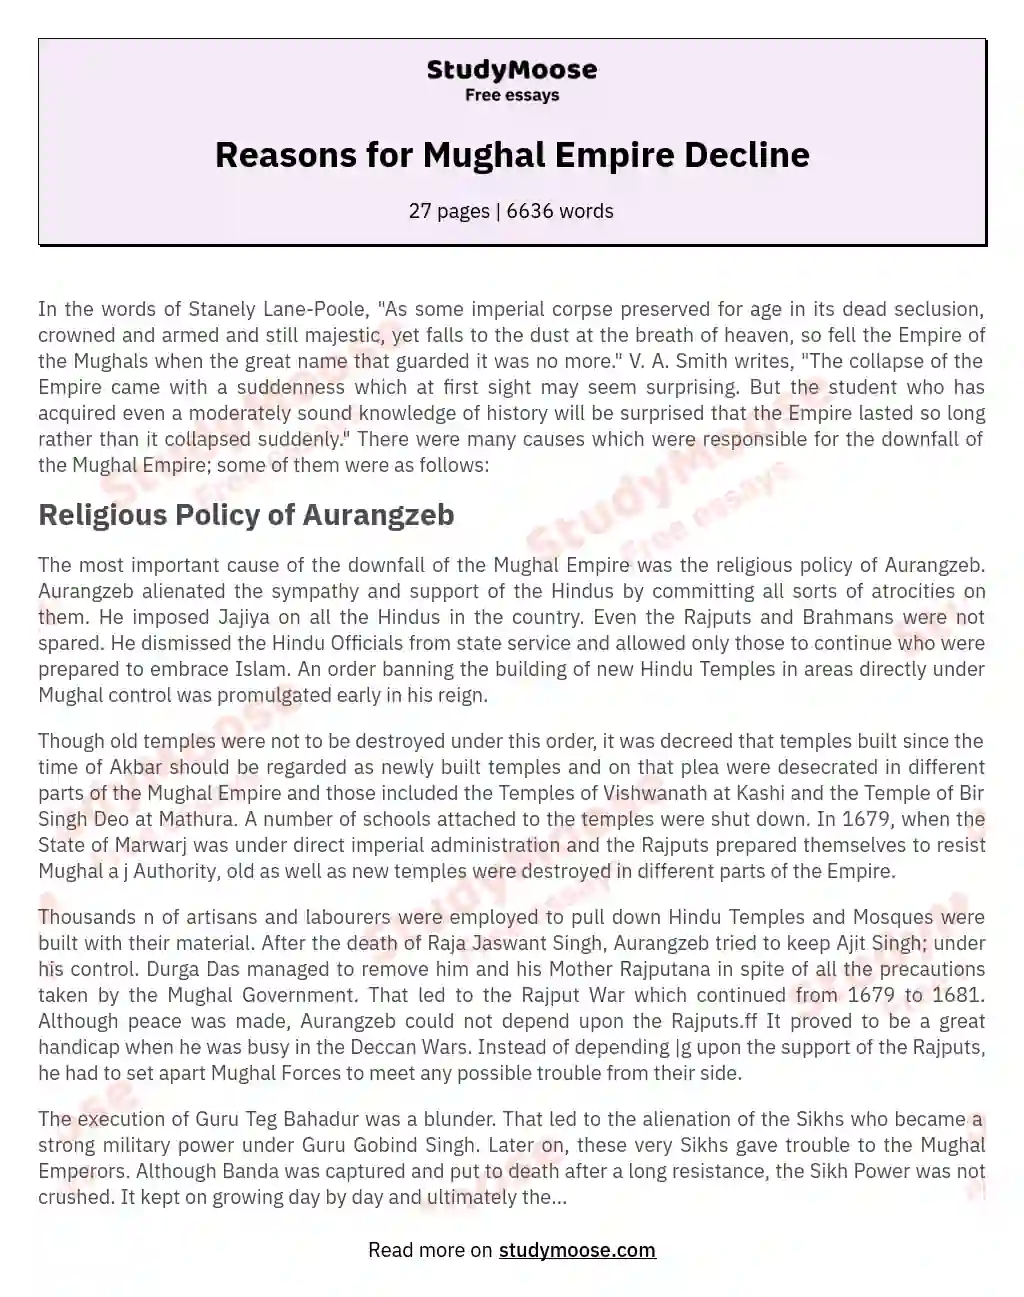 Reasons for Mughal Empire Decline essay